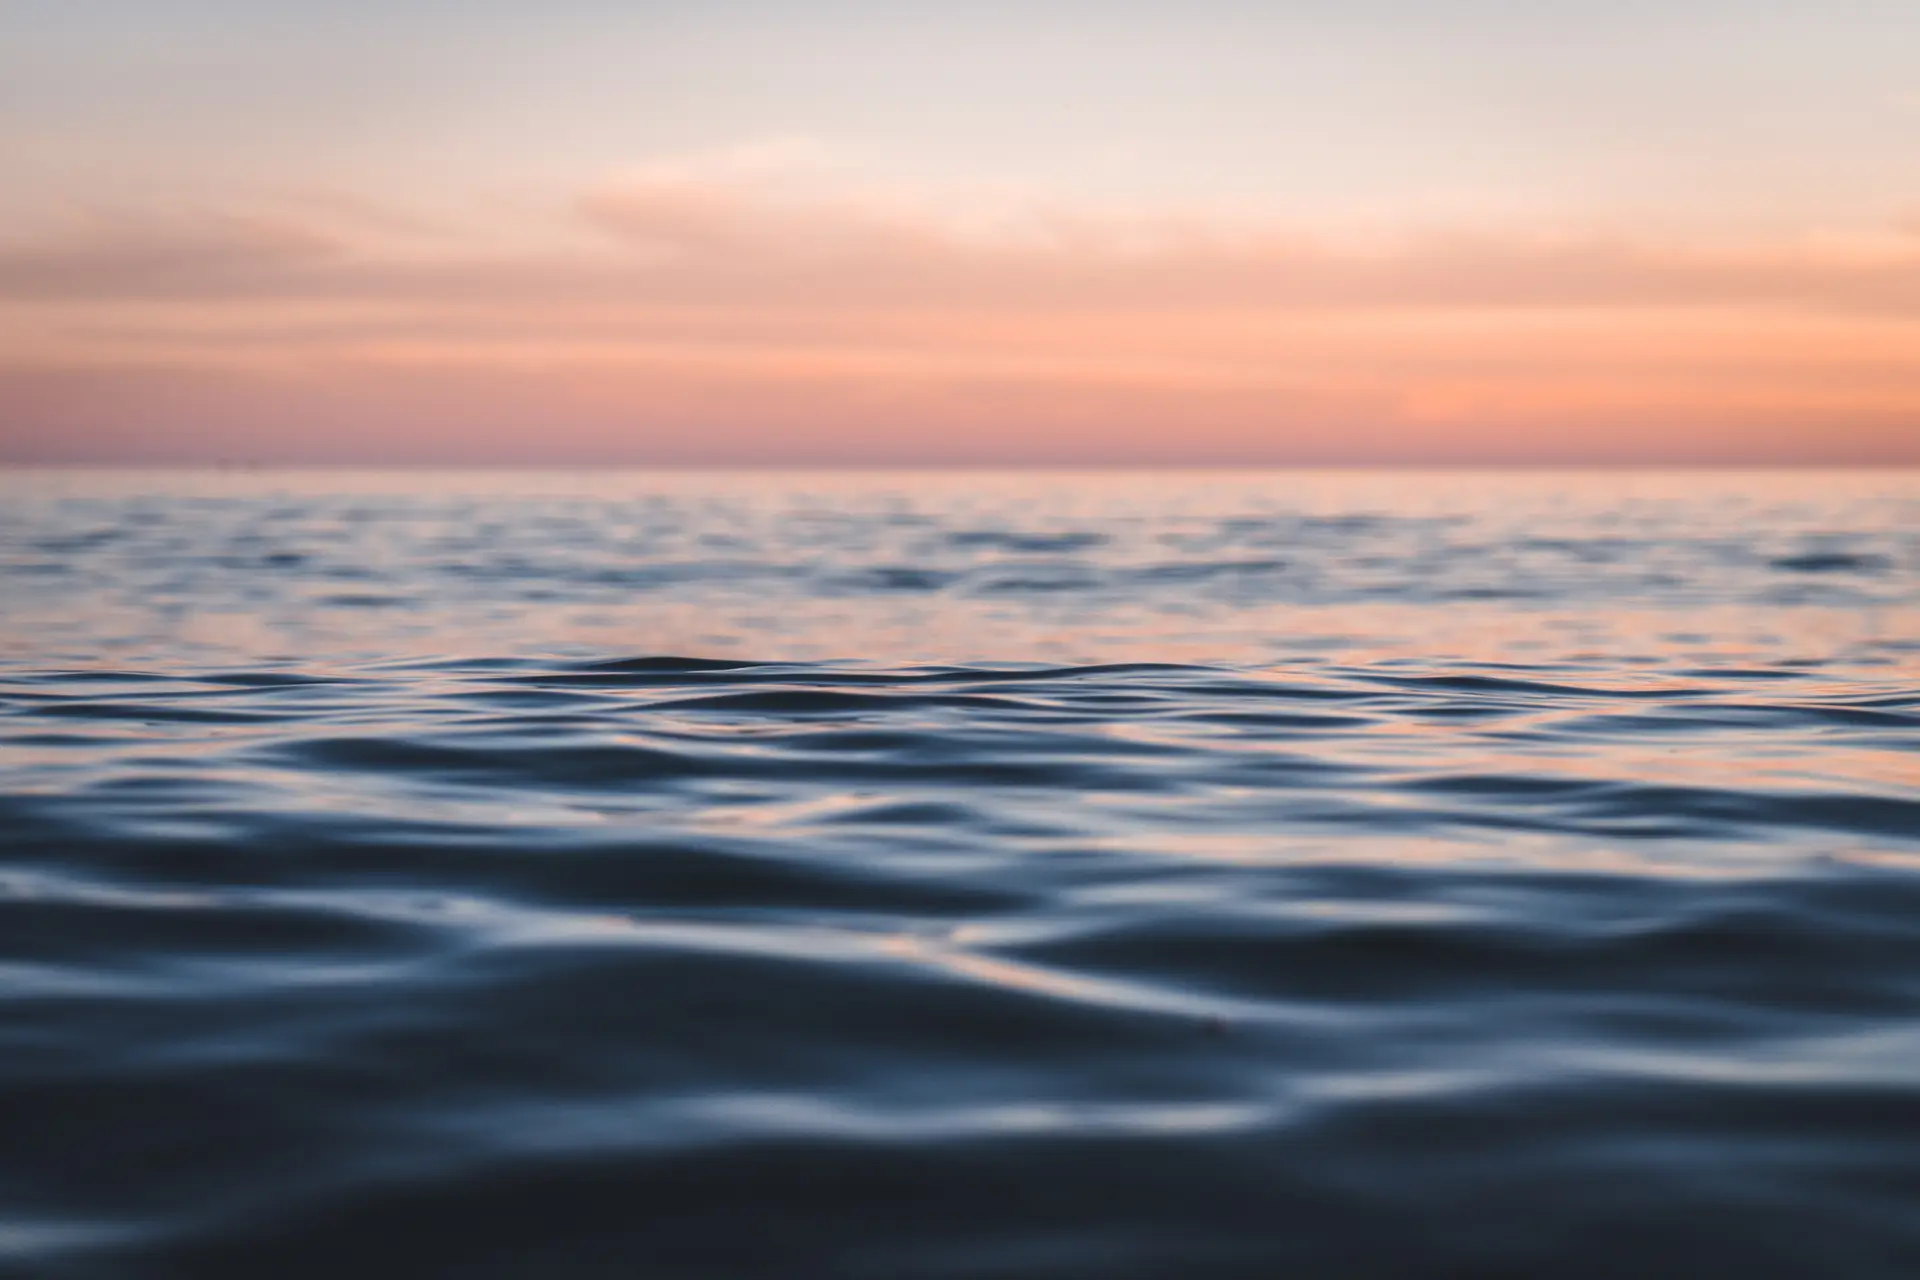 Soft color calm sea close-up relaxing seascape. Zen-like meditative summer background, Costa del Sol, Spain